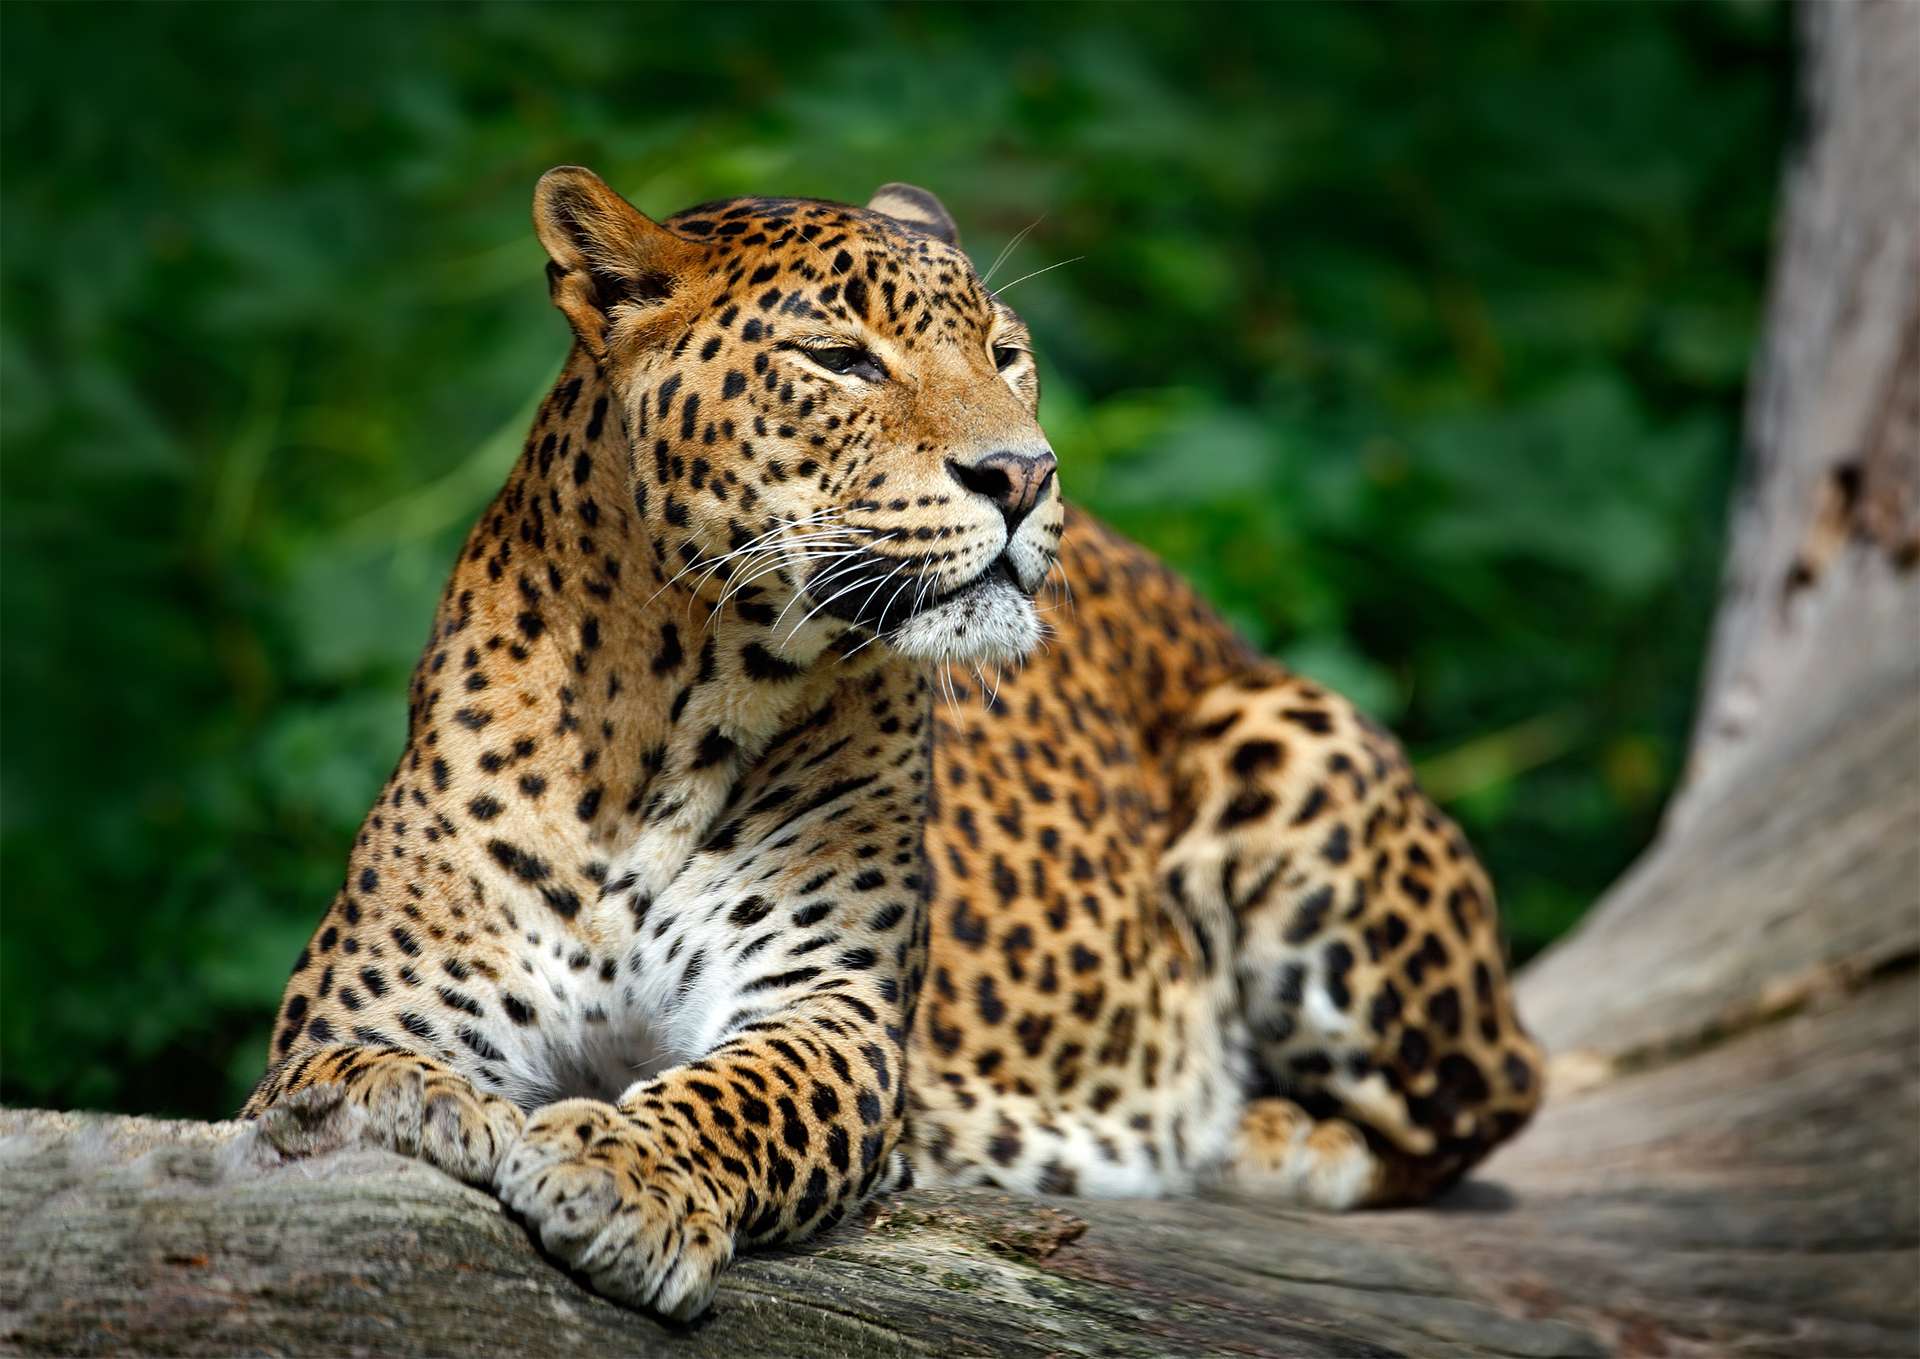 Sri Lankan leopard, Panthera pardus kotiya, big spotted cat lying on the tree in the nature habitat, Yala national park, Sri Lanka.